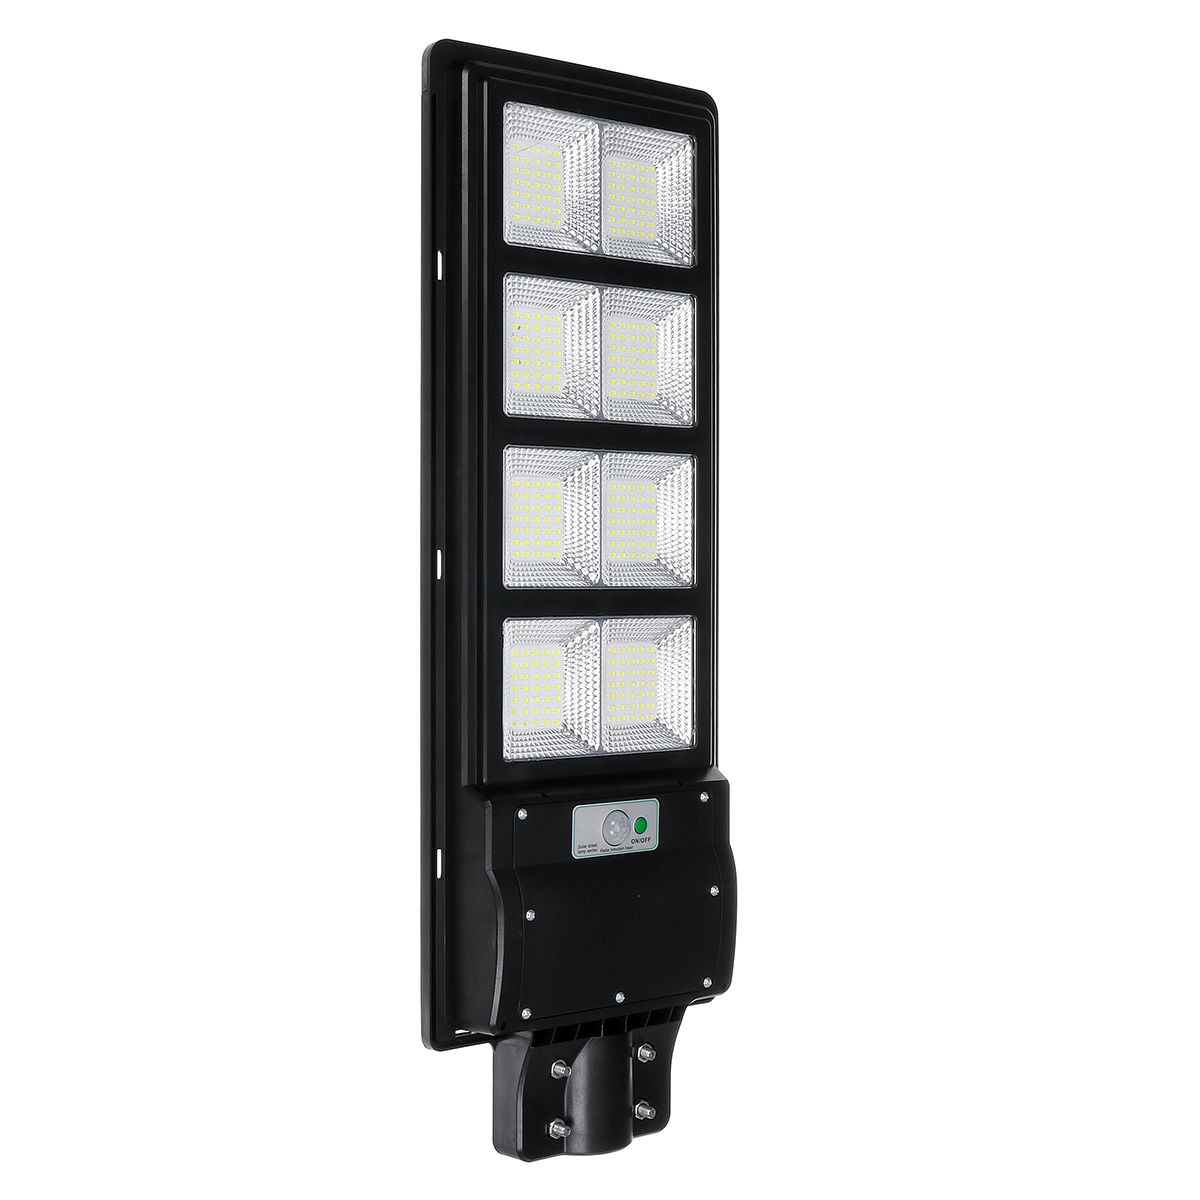 300600900W-LED-Solar-Street-Light-Motion-Sensor-Outdoor-Wall-Light-1638807